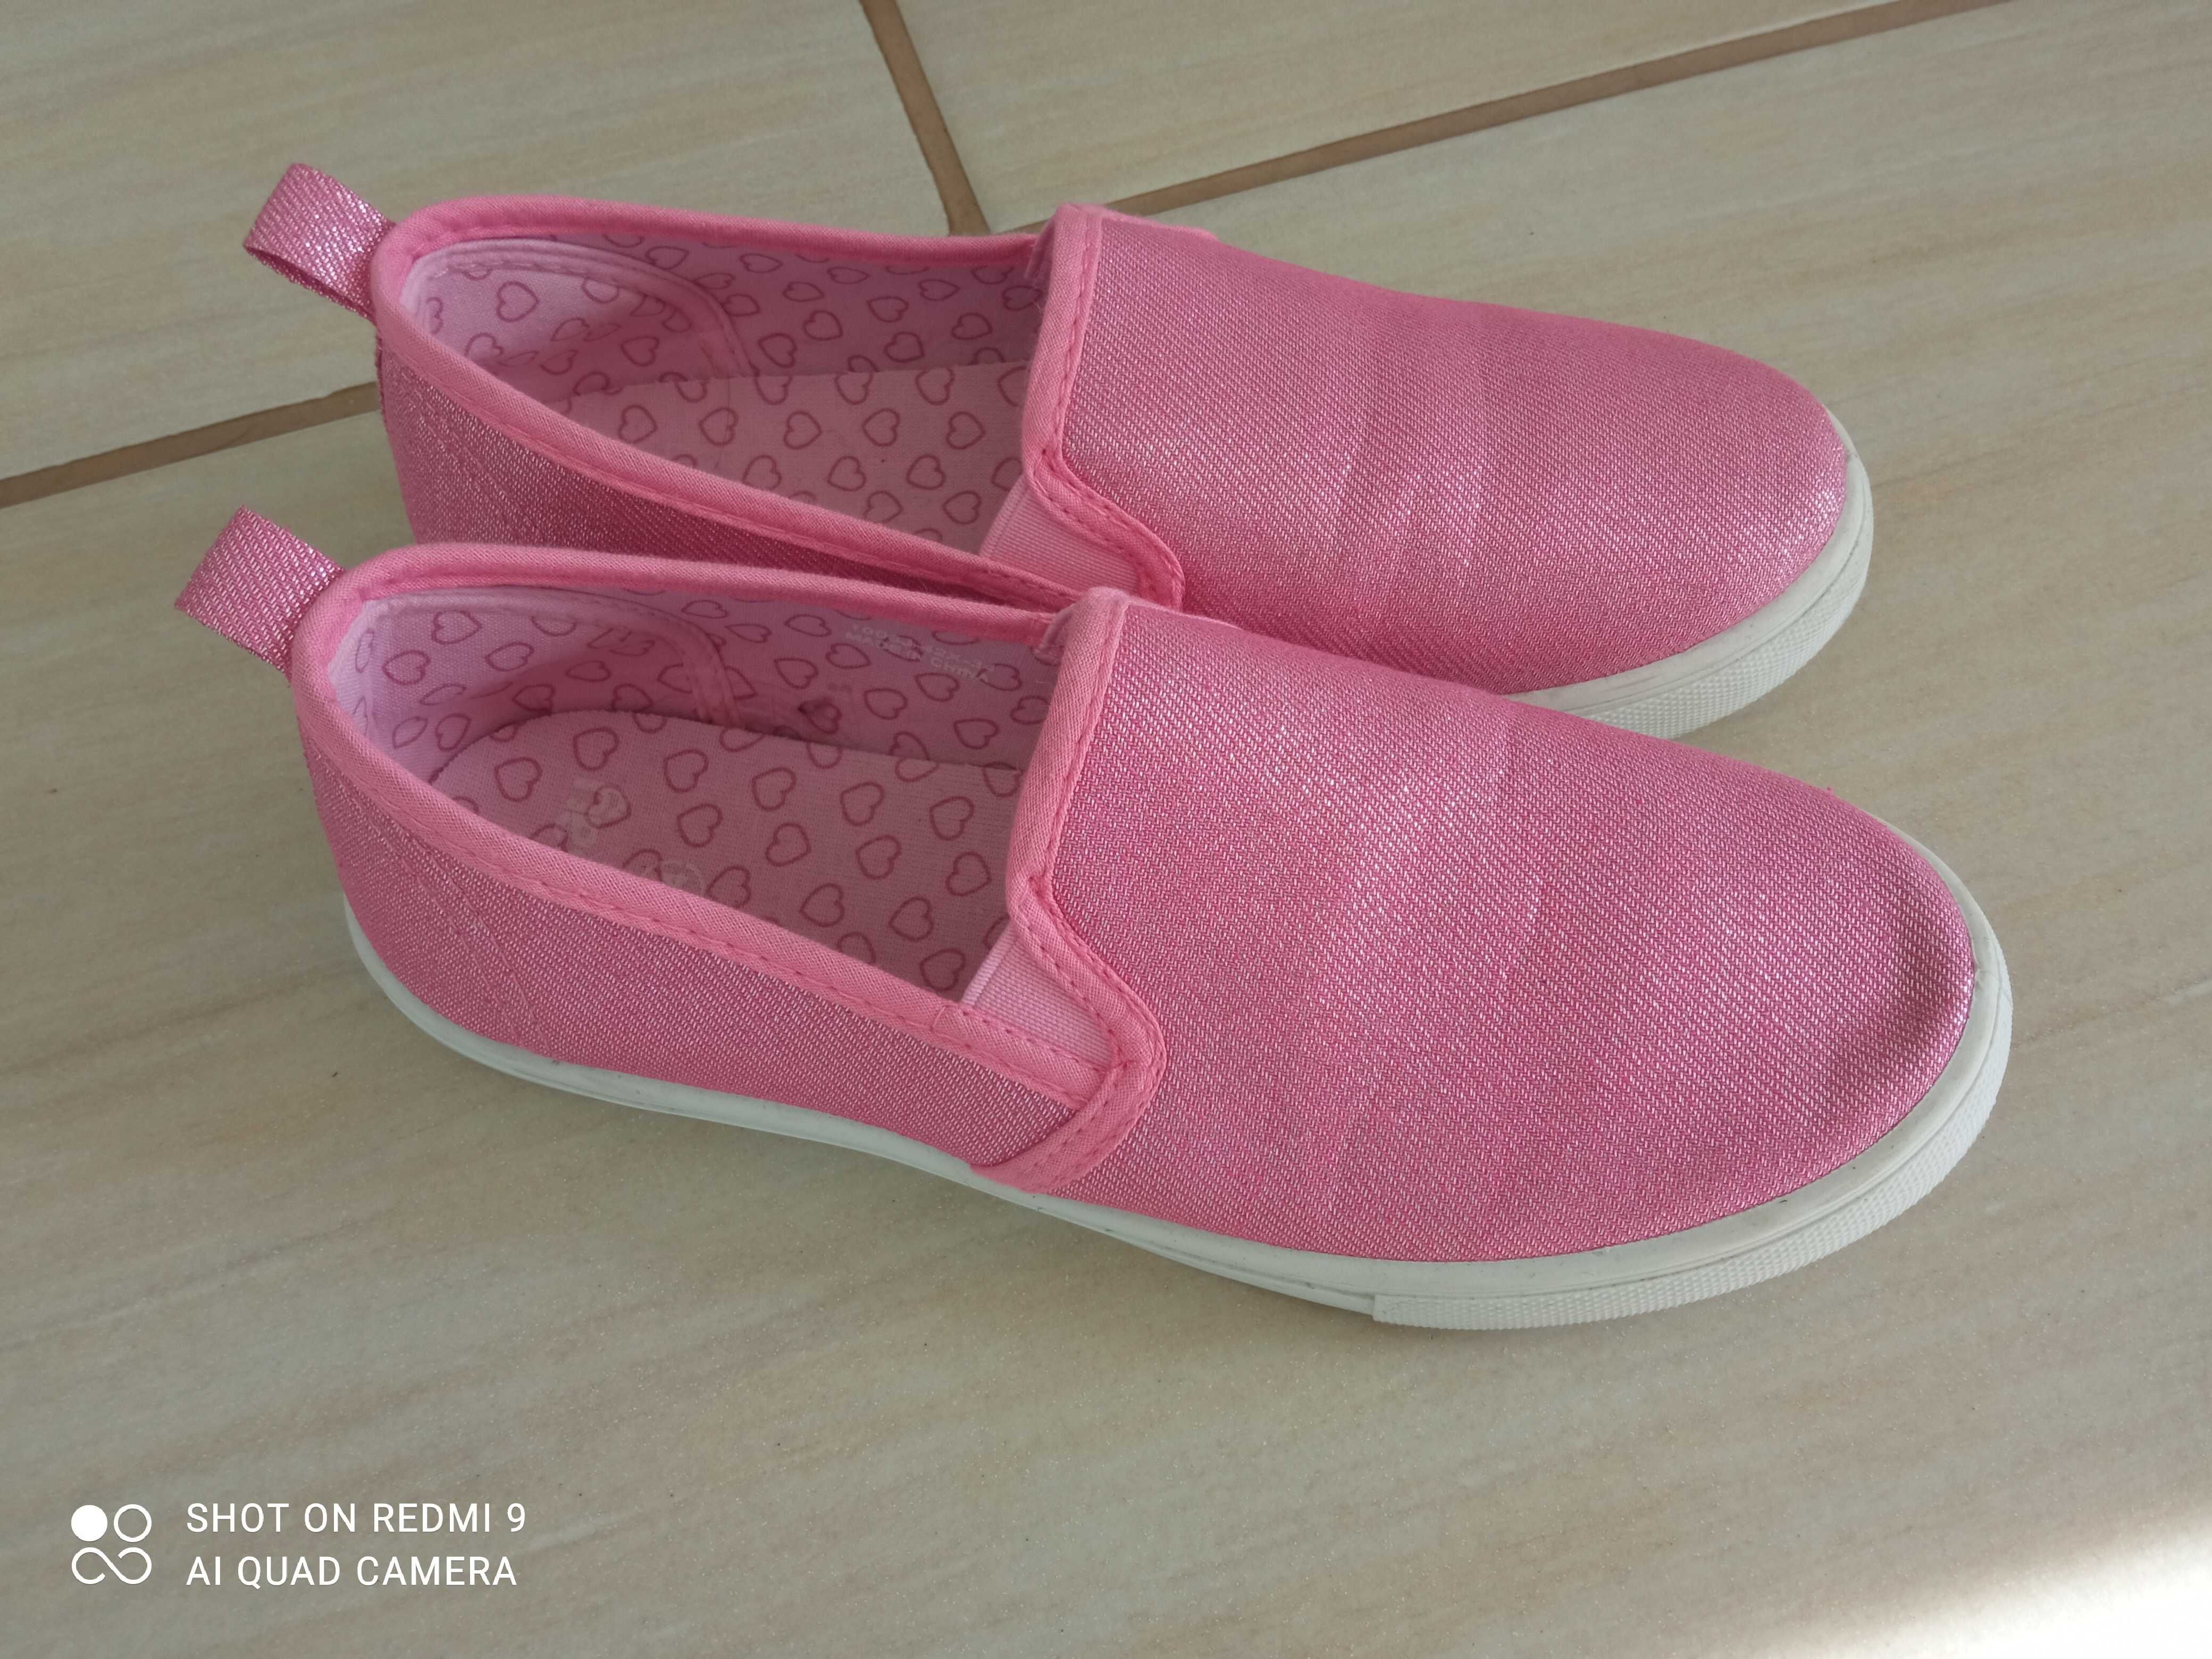 Buty buciki wsuwane różowe brokatowe 34